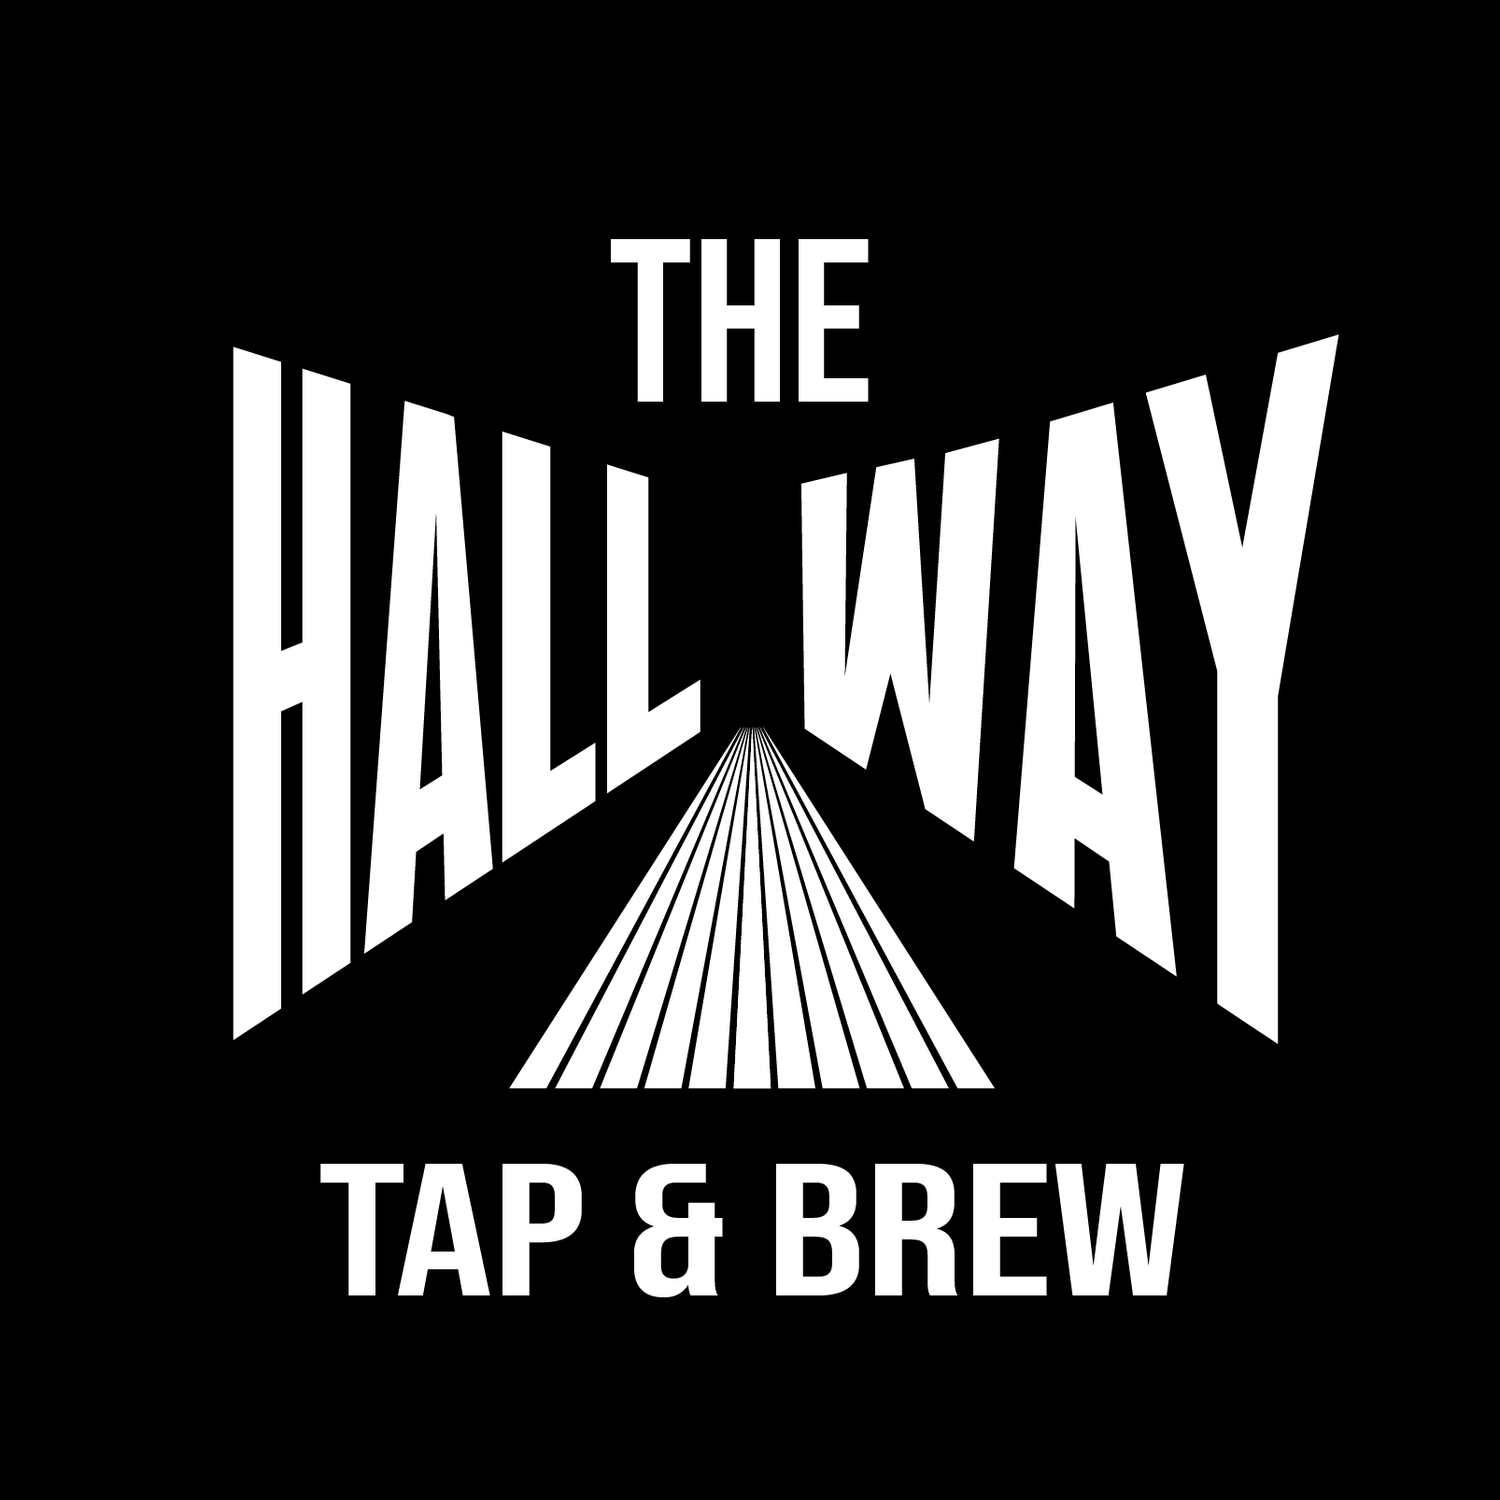 The Hallway Tap & Brew